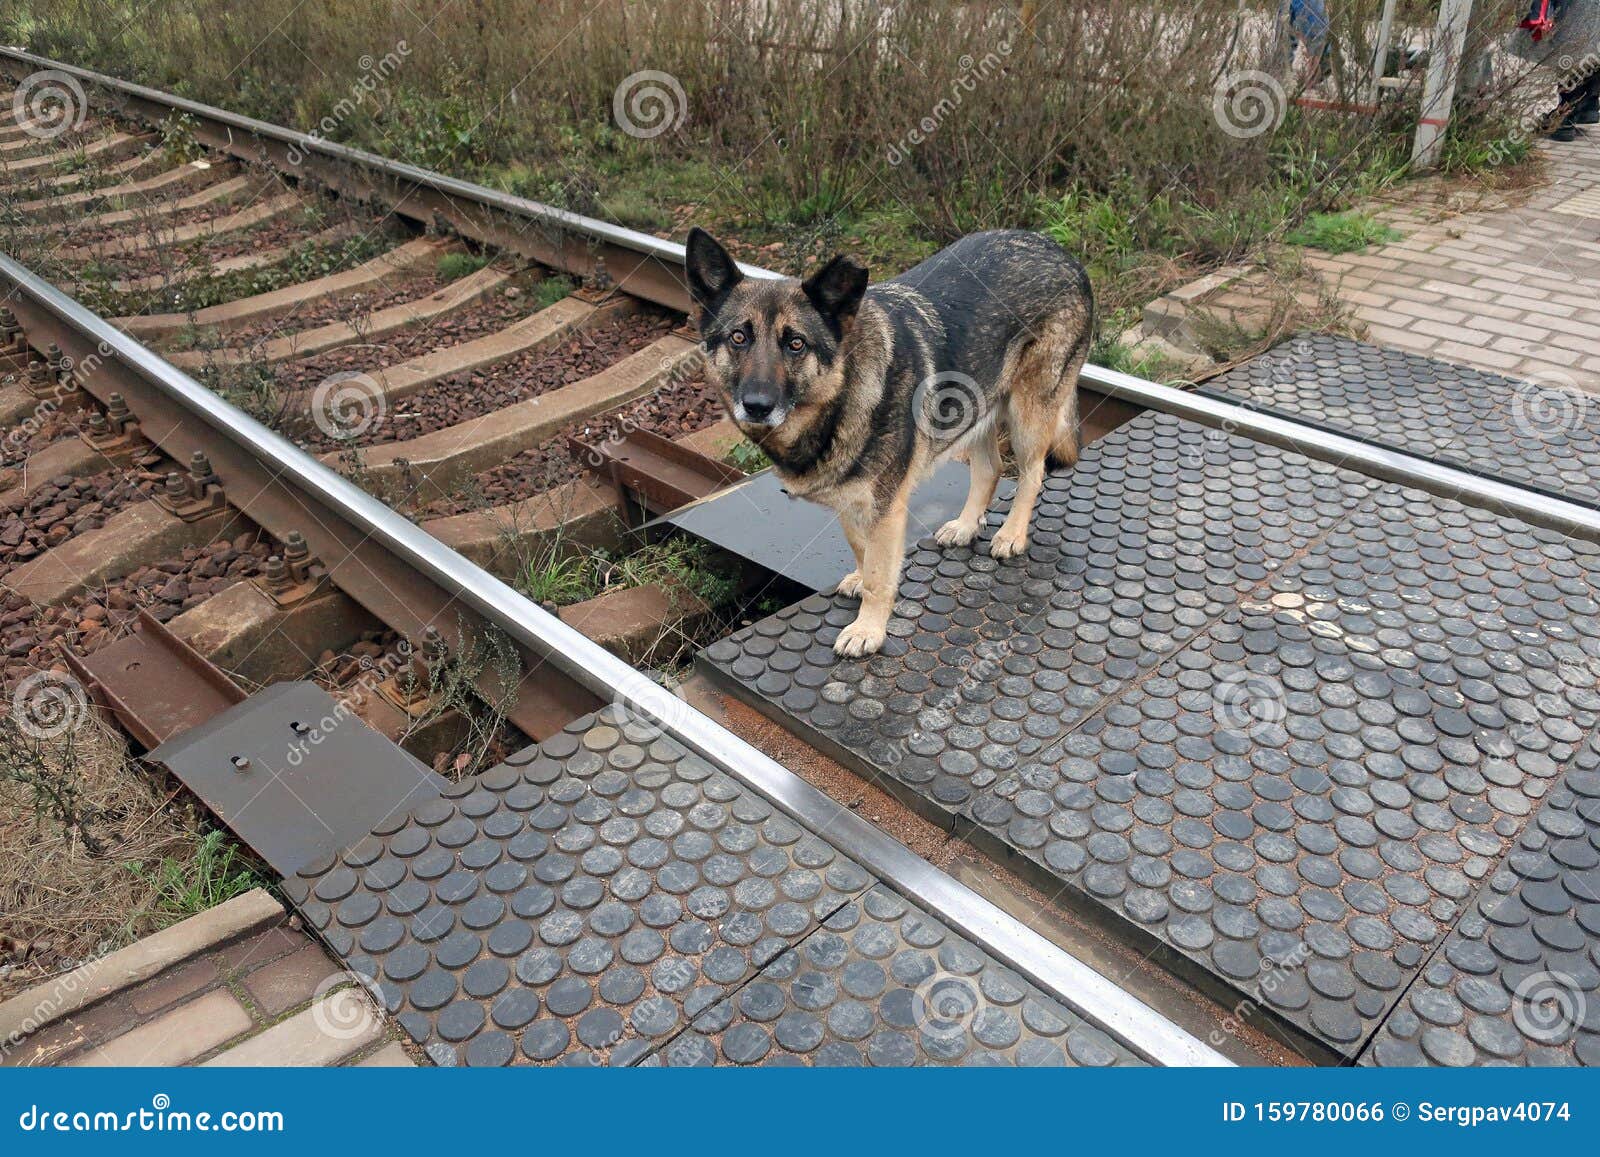 Dog on railroad tracks. stock image. Image of outdoors 